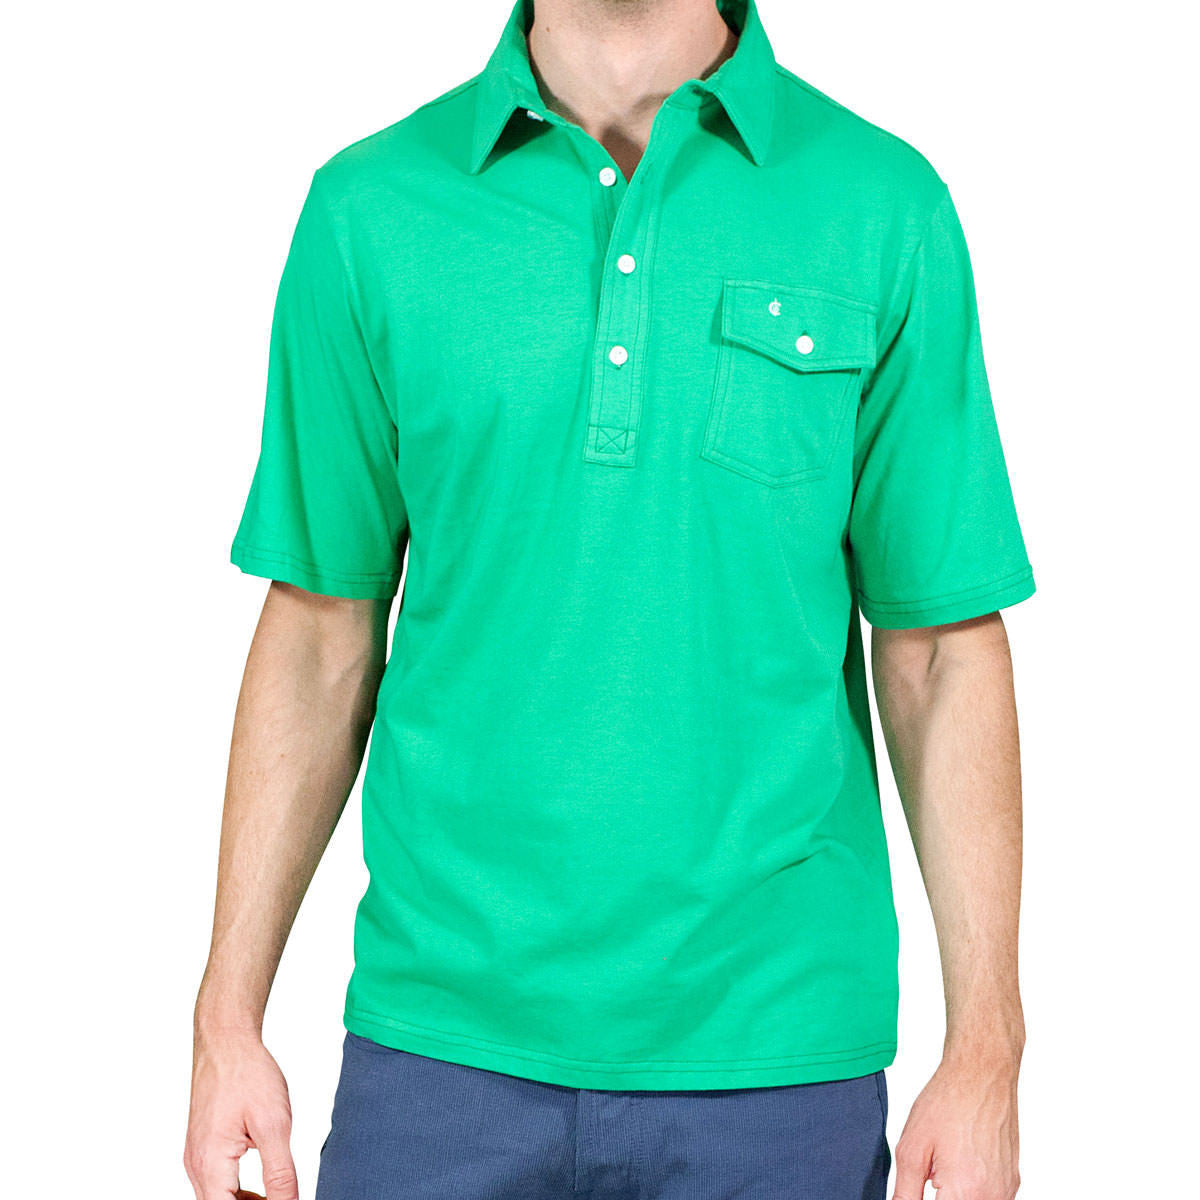 The Players Shirt - Augusta Green